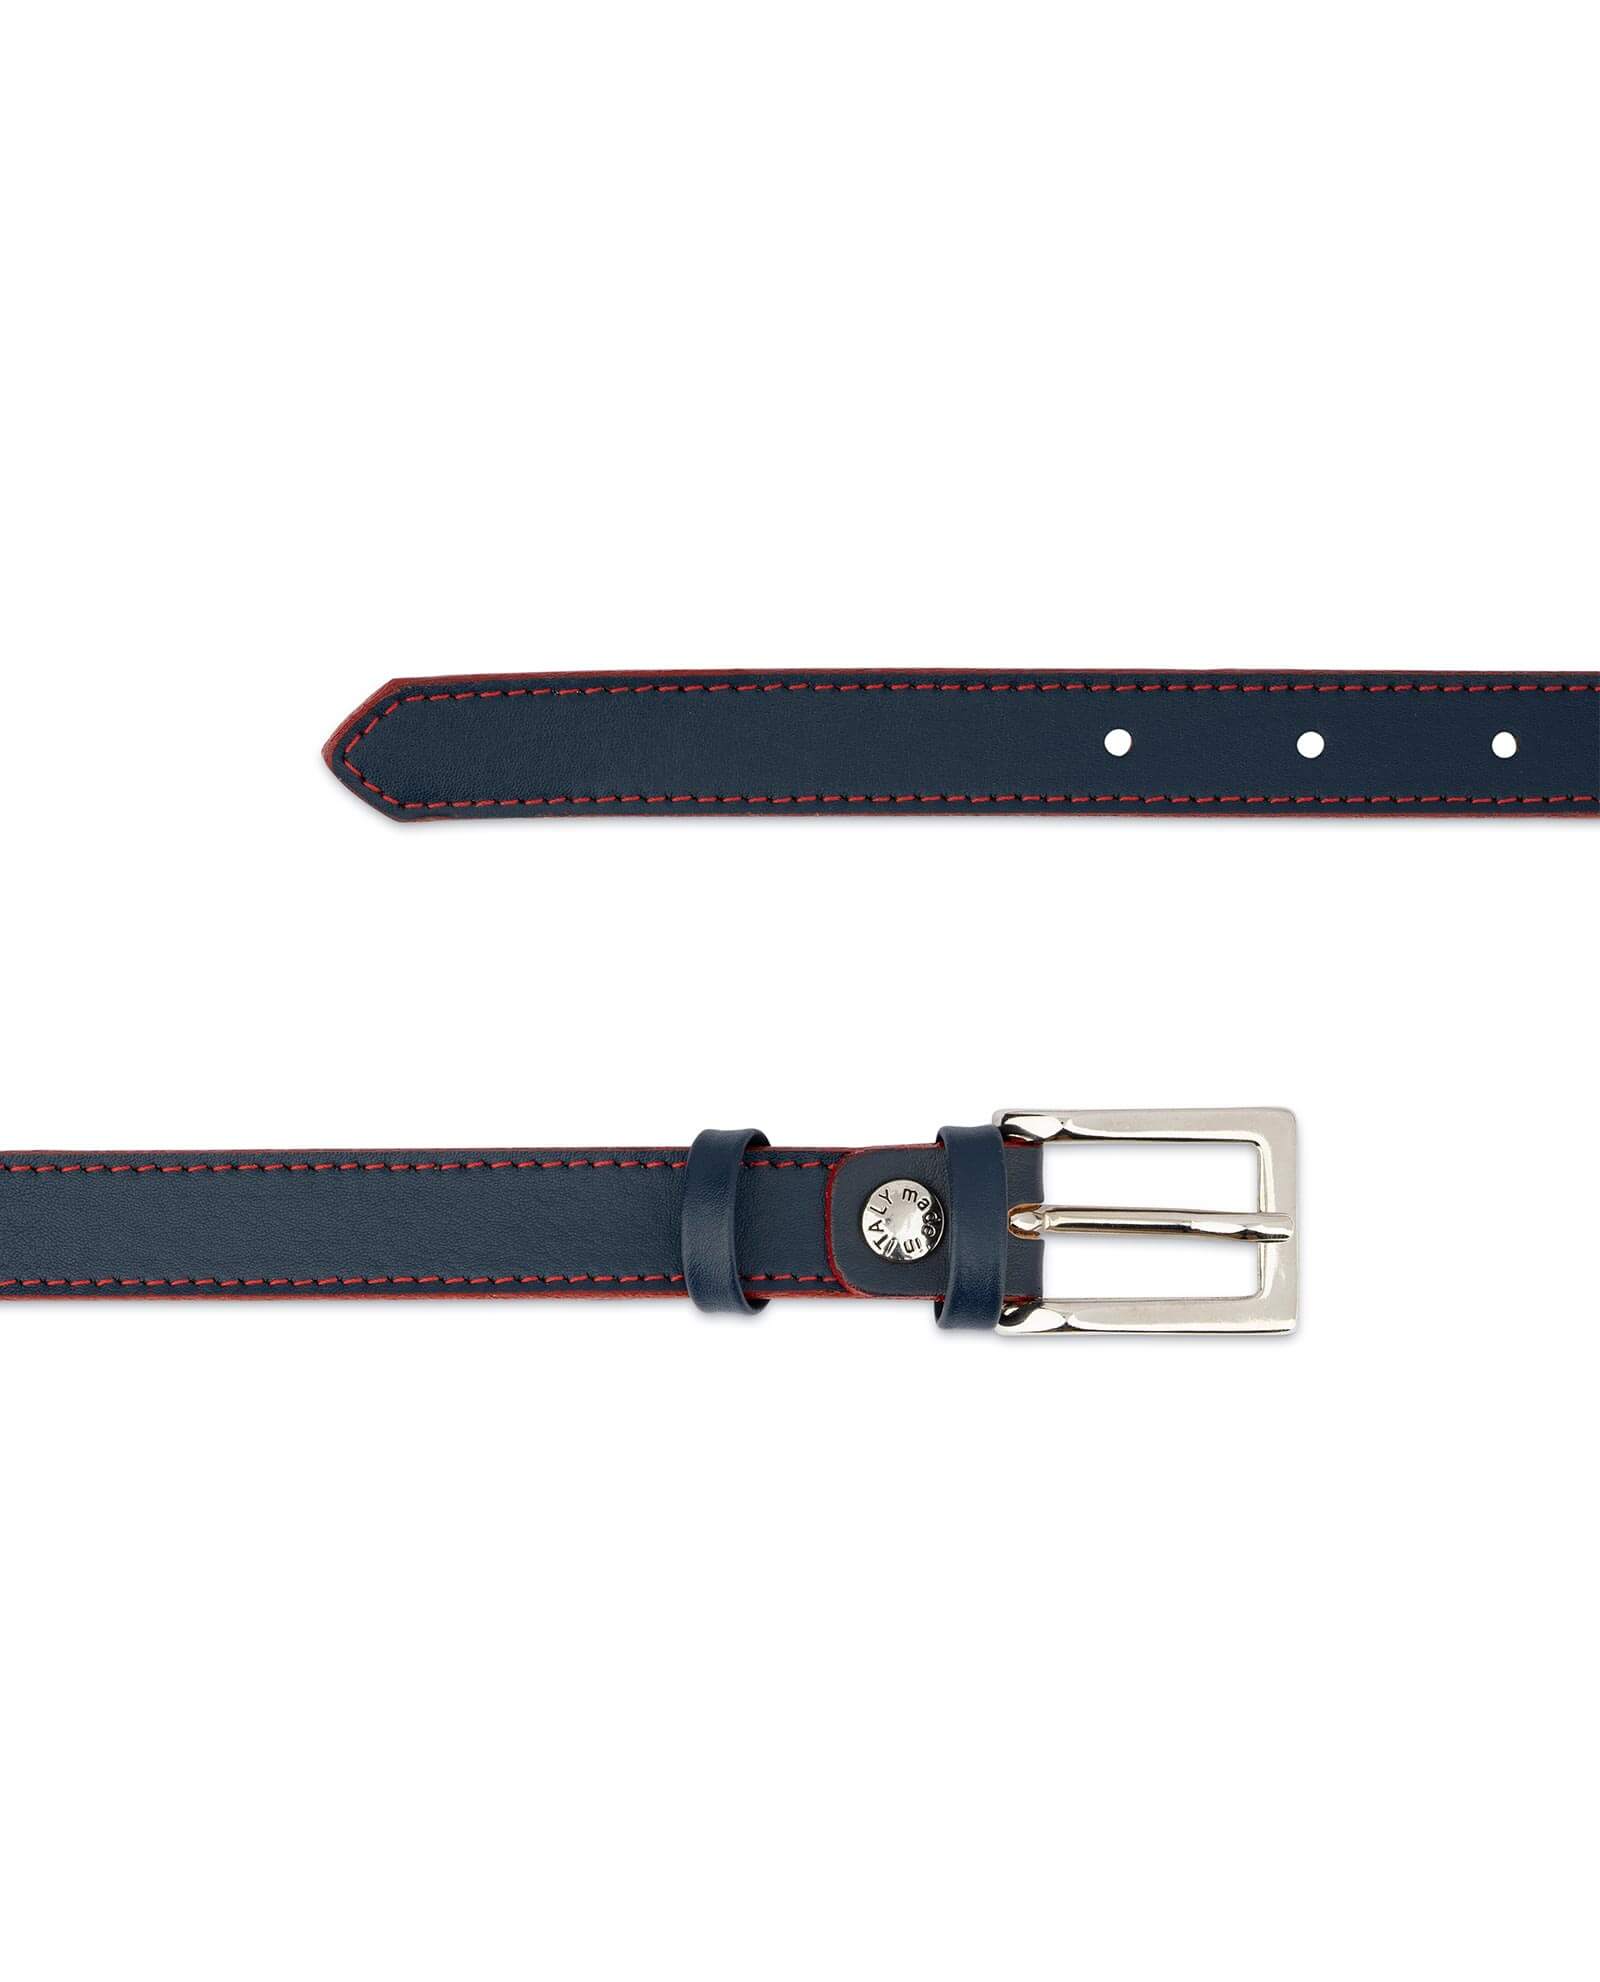 Buy Navy Blue Boys Belts | Red Edges | LeatherBeltsOnline.com